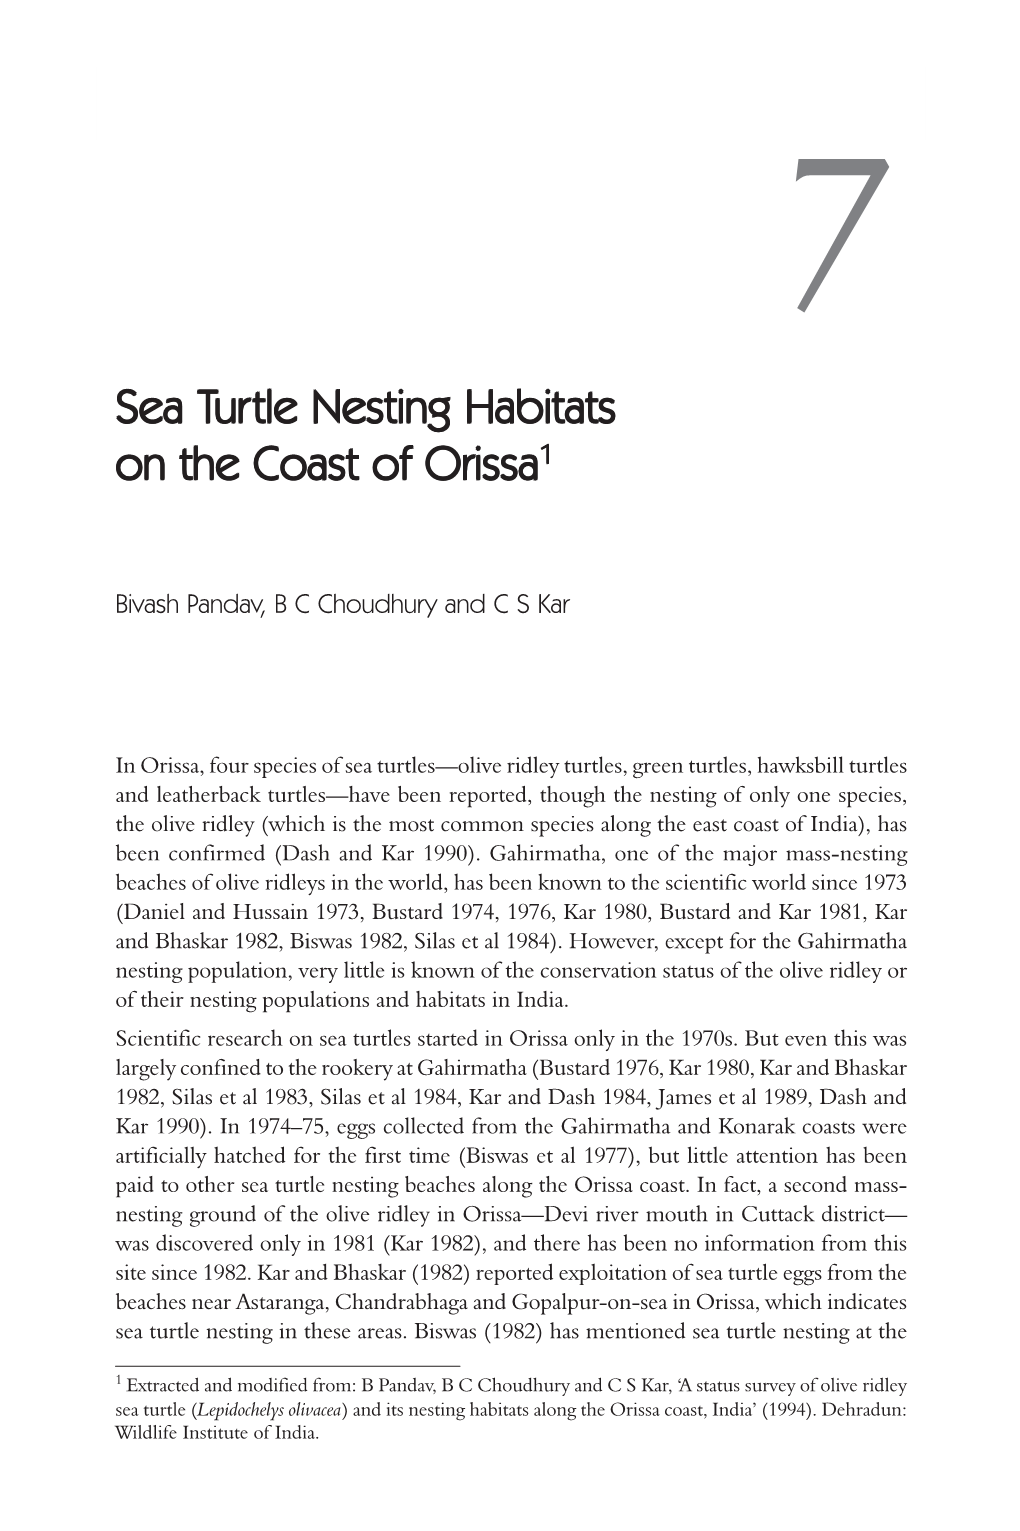 Sea Turtle Nesting Habitats on the Coast of Orissa1